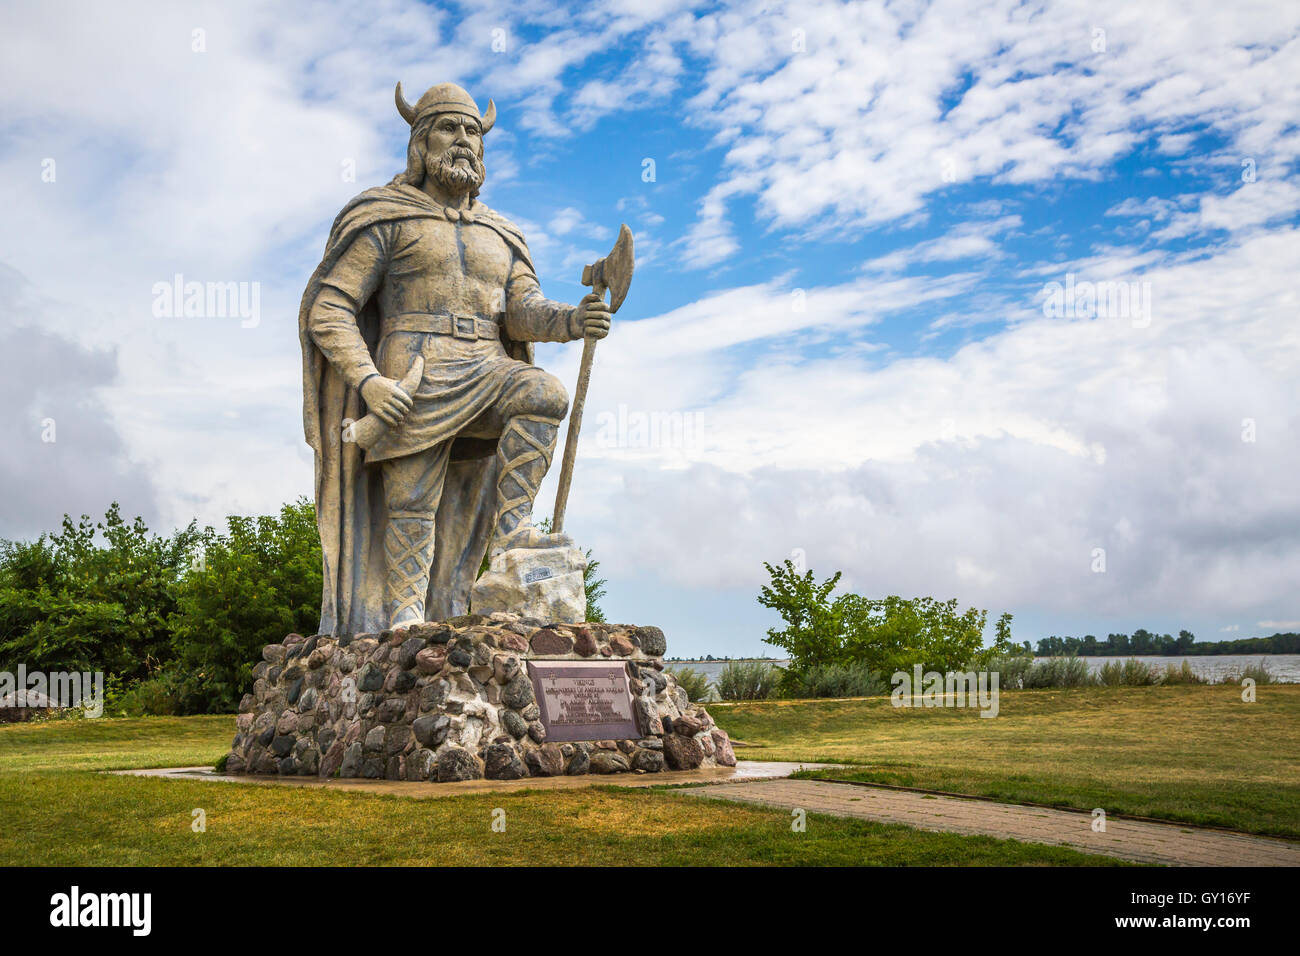 The Viking statue in Gimli, Manitoba, Canada. Stock Photo